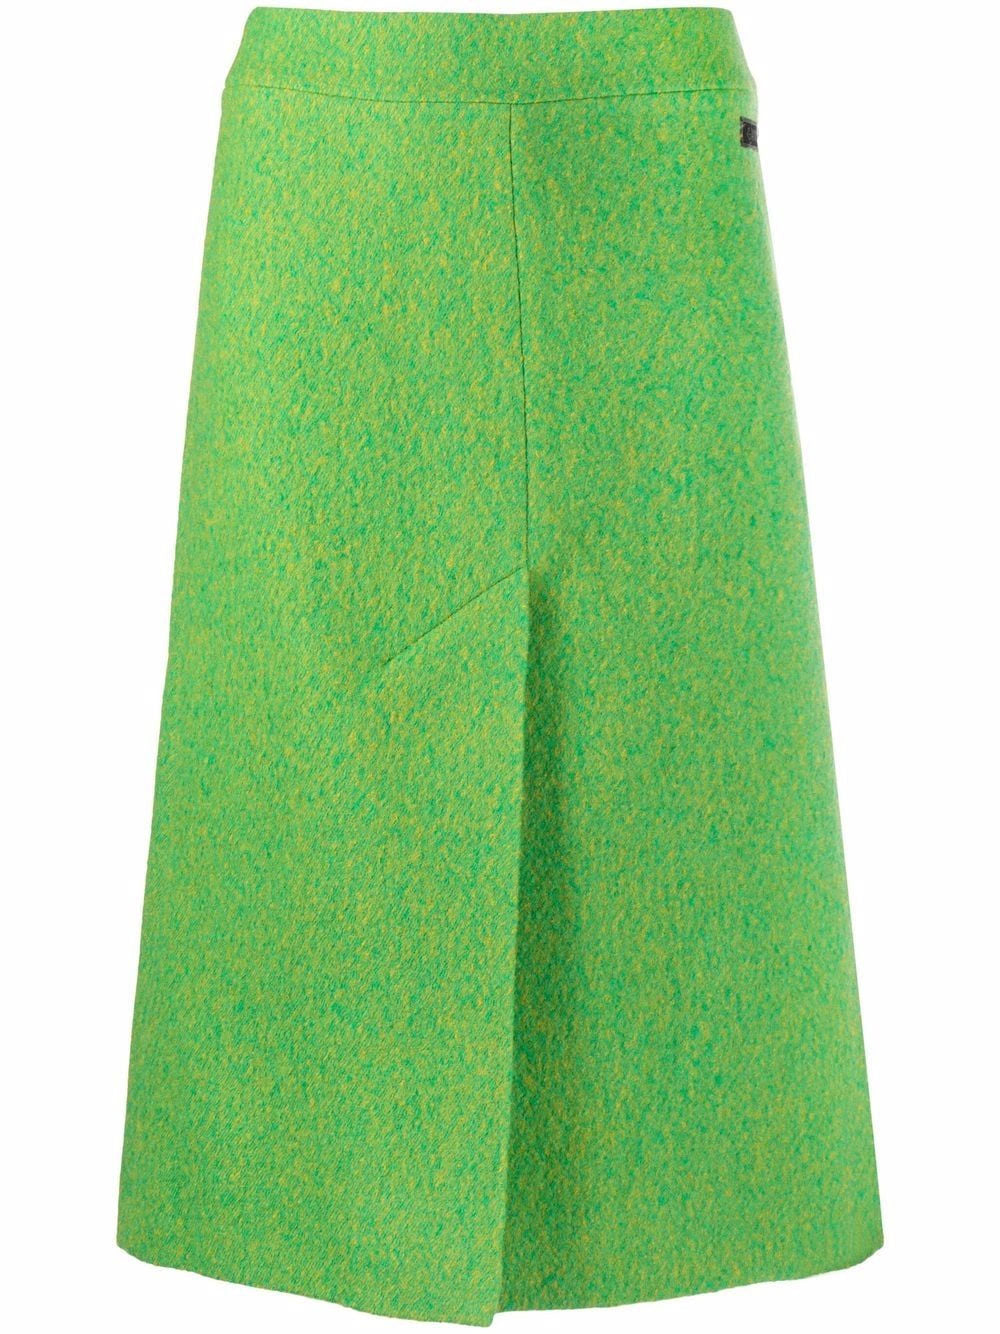 Midi skirt in recycled wool